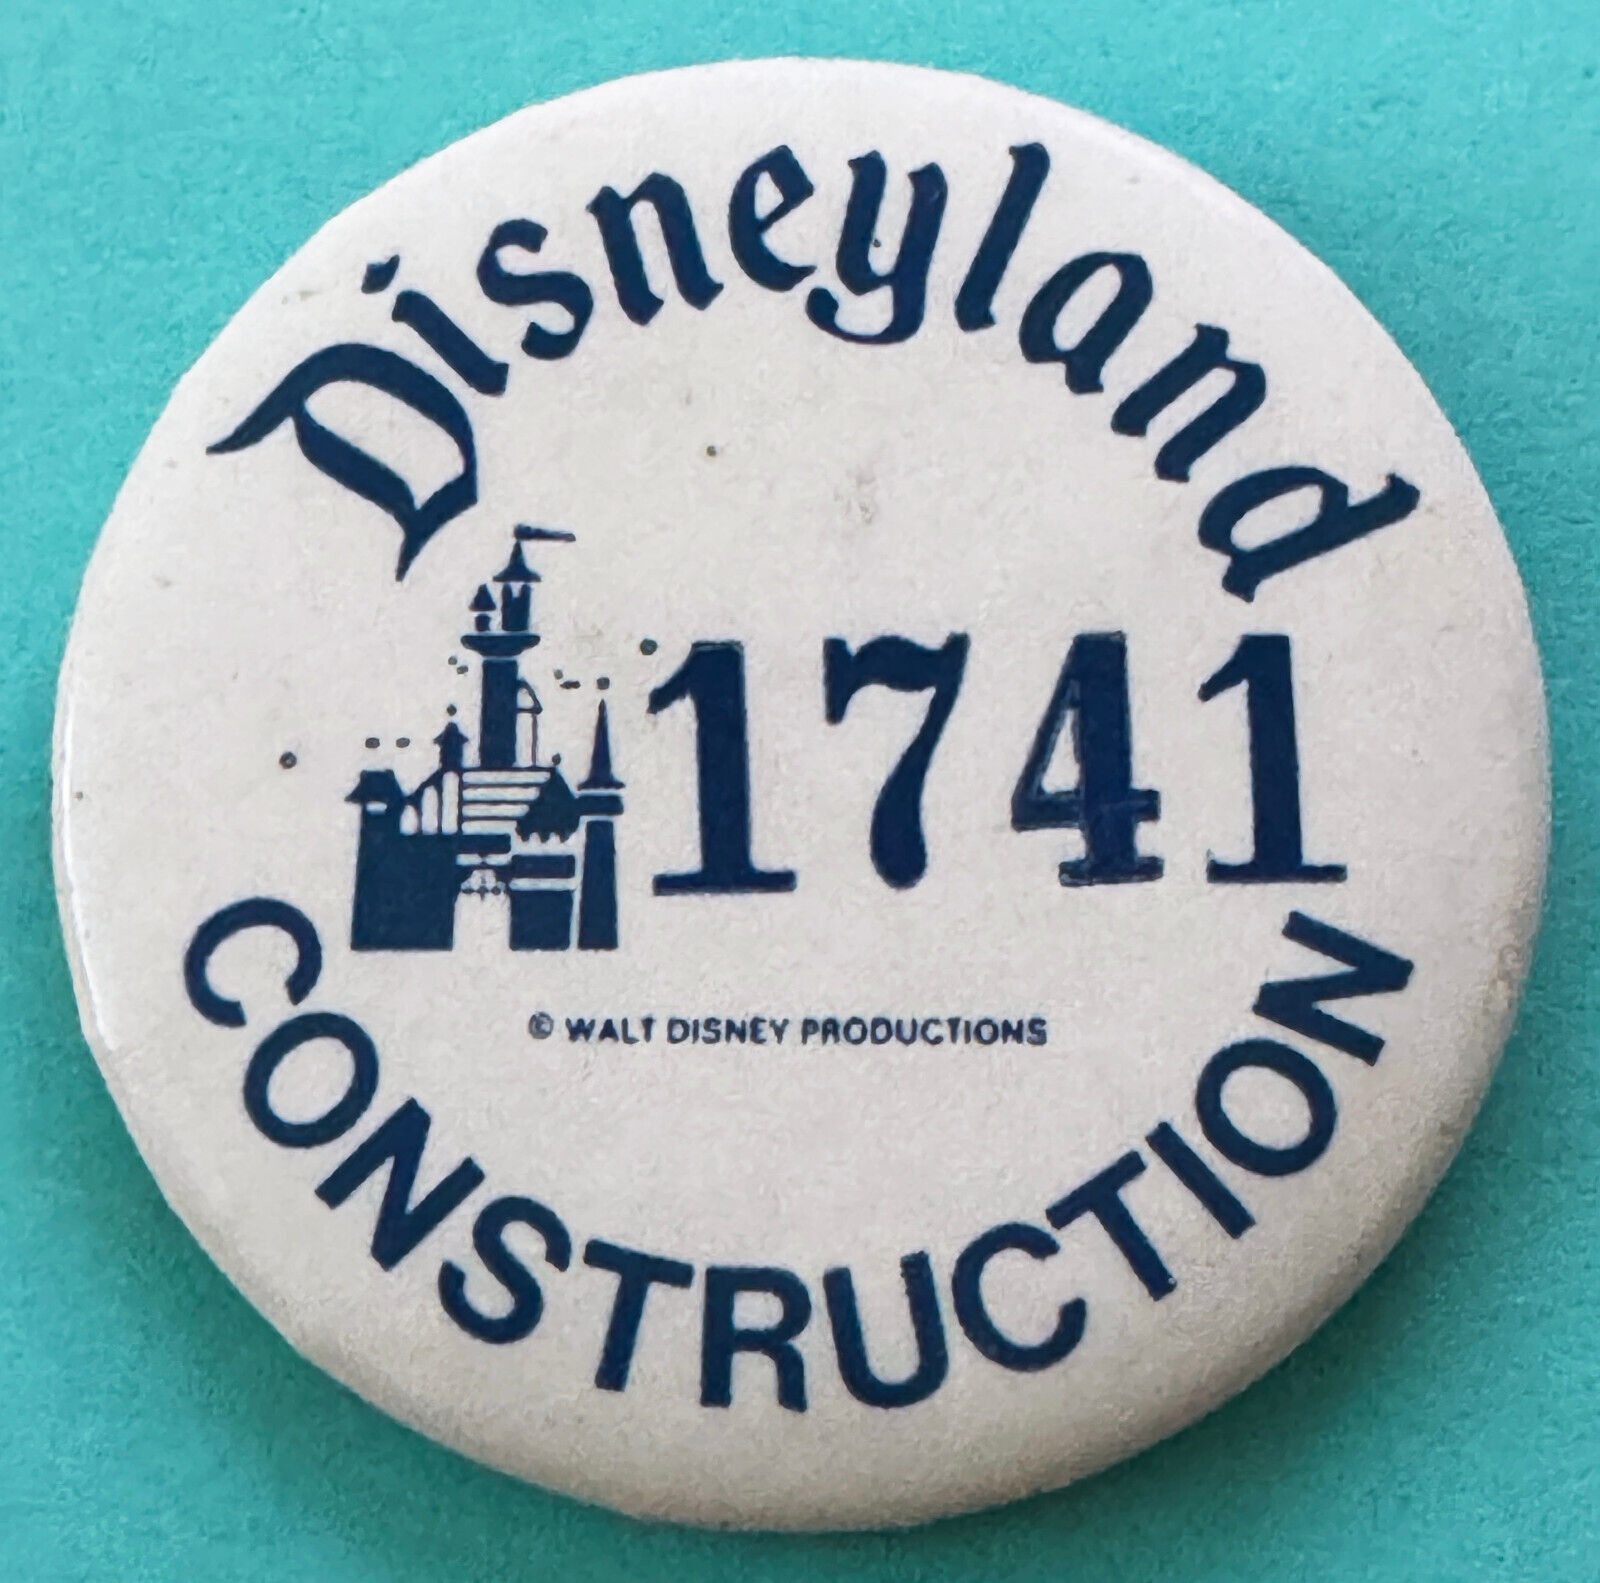 Vintage Disneyland PInback Button worn by Construction Workers circa 1982